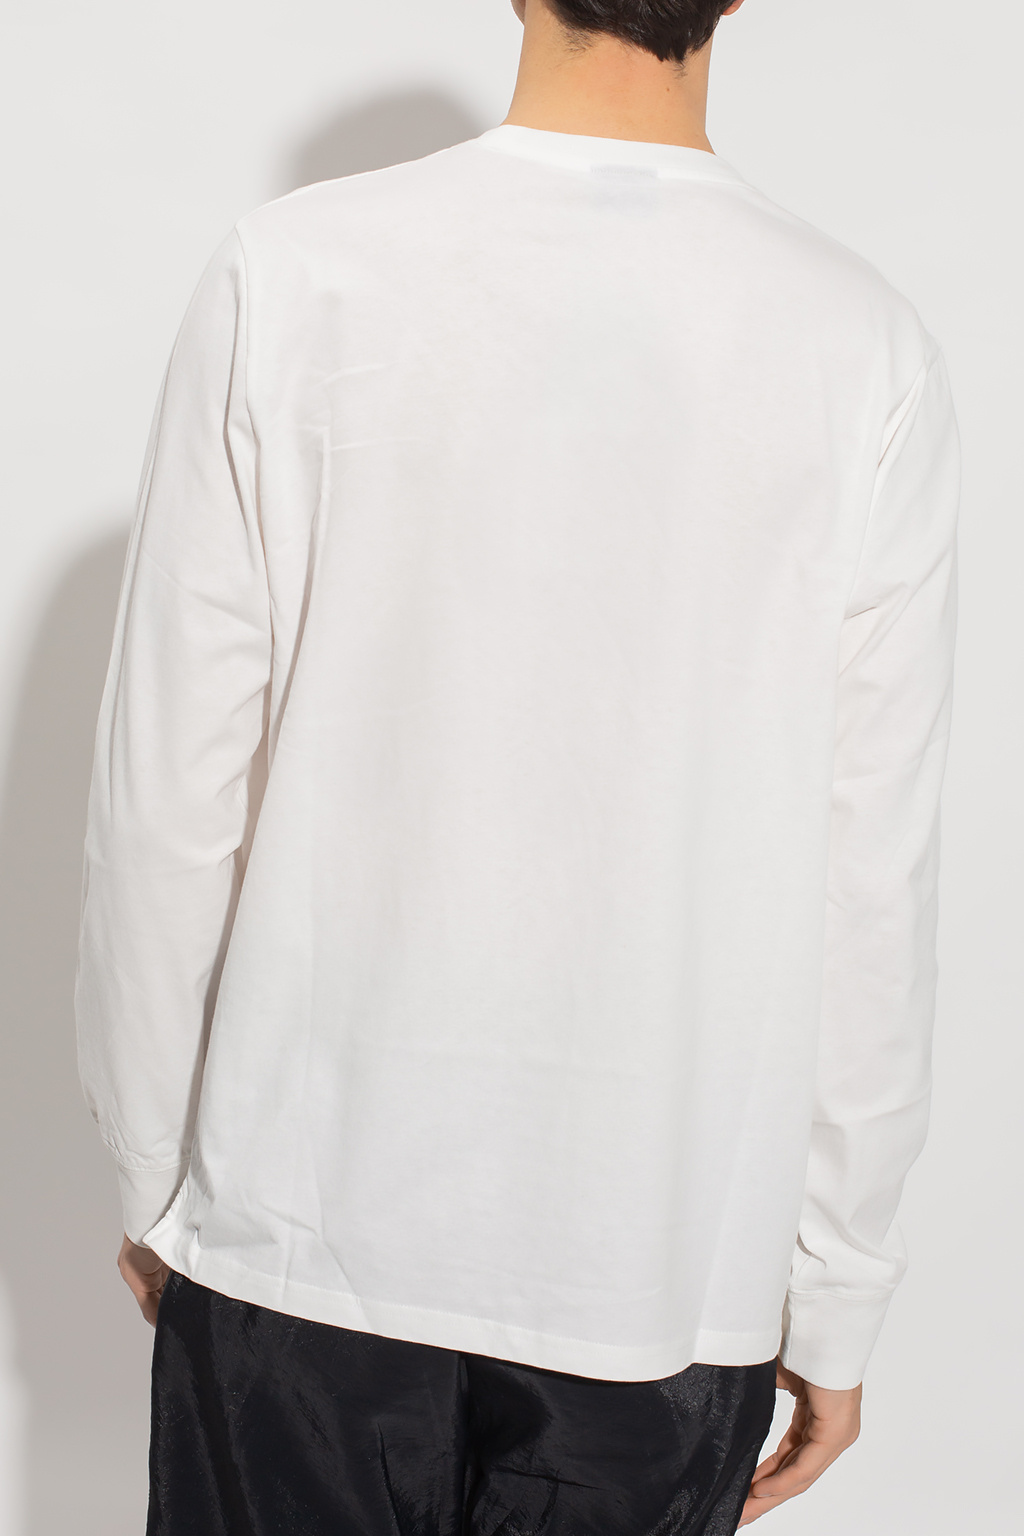 Slazenger Plain T-shirt Junior Boys Missoni abstract-print crew-neck T-shirt